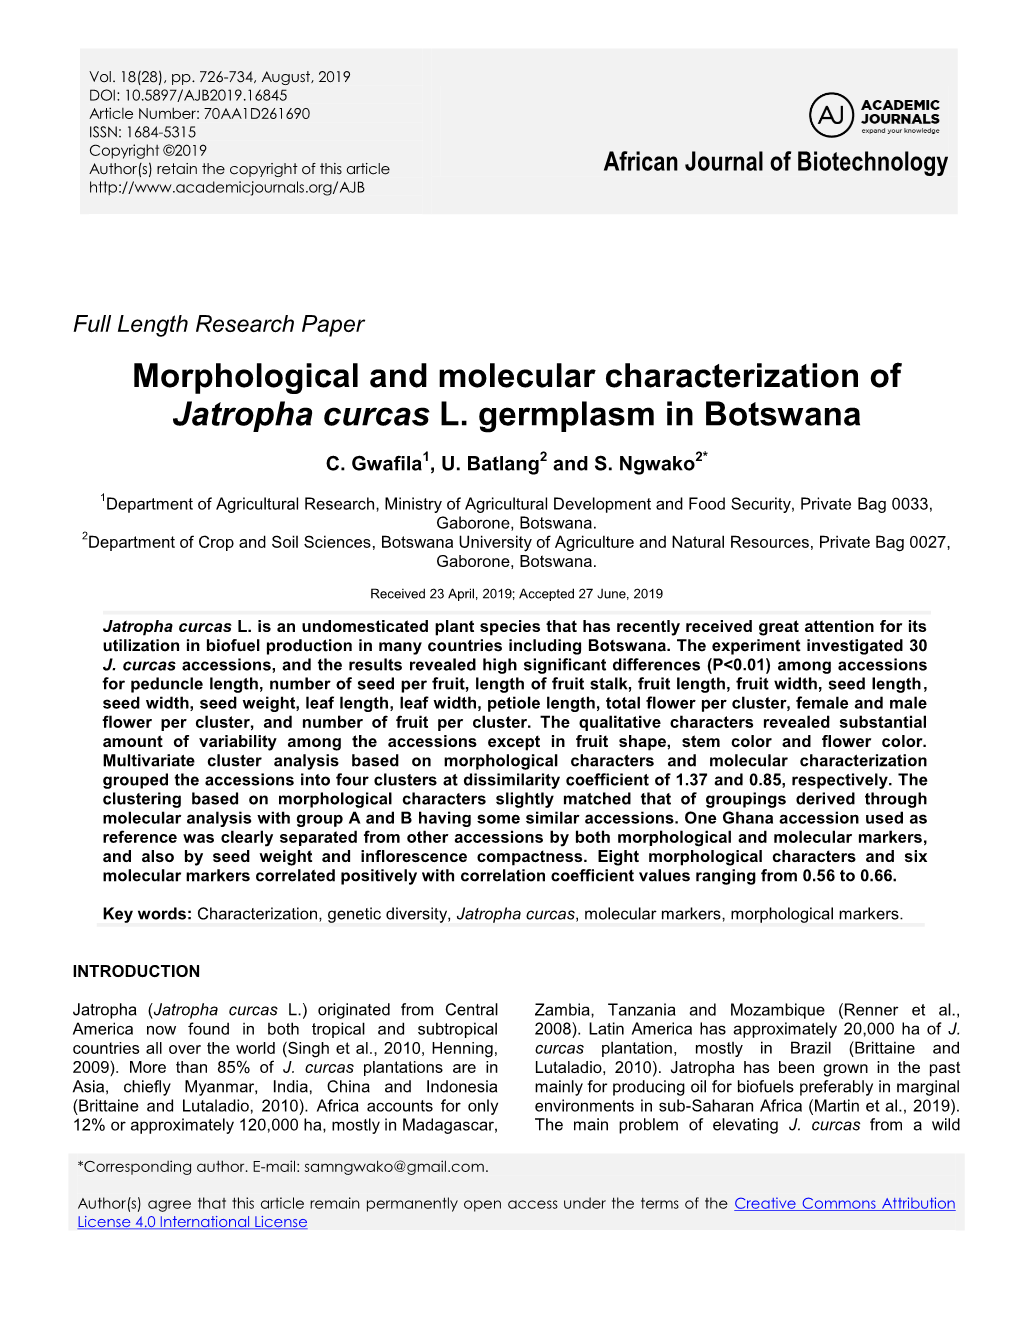 Morphological and Molecular Characterization of Jatropha Curcas L